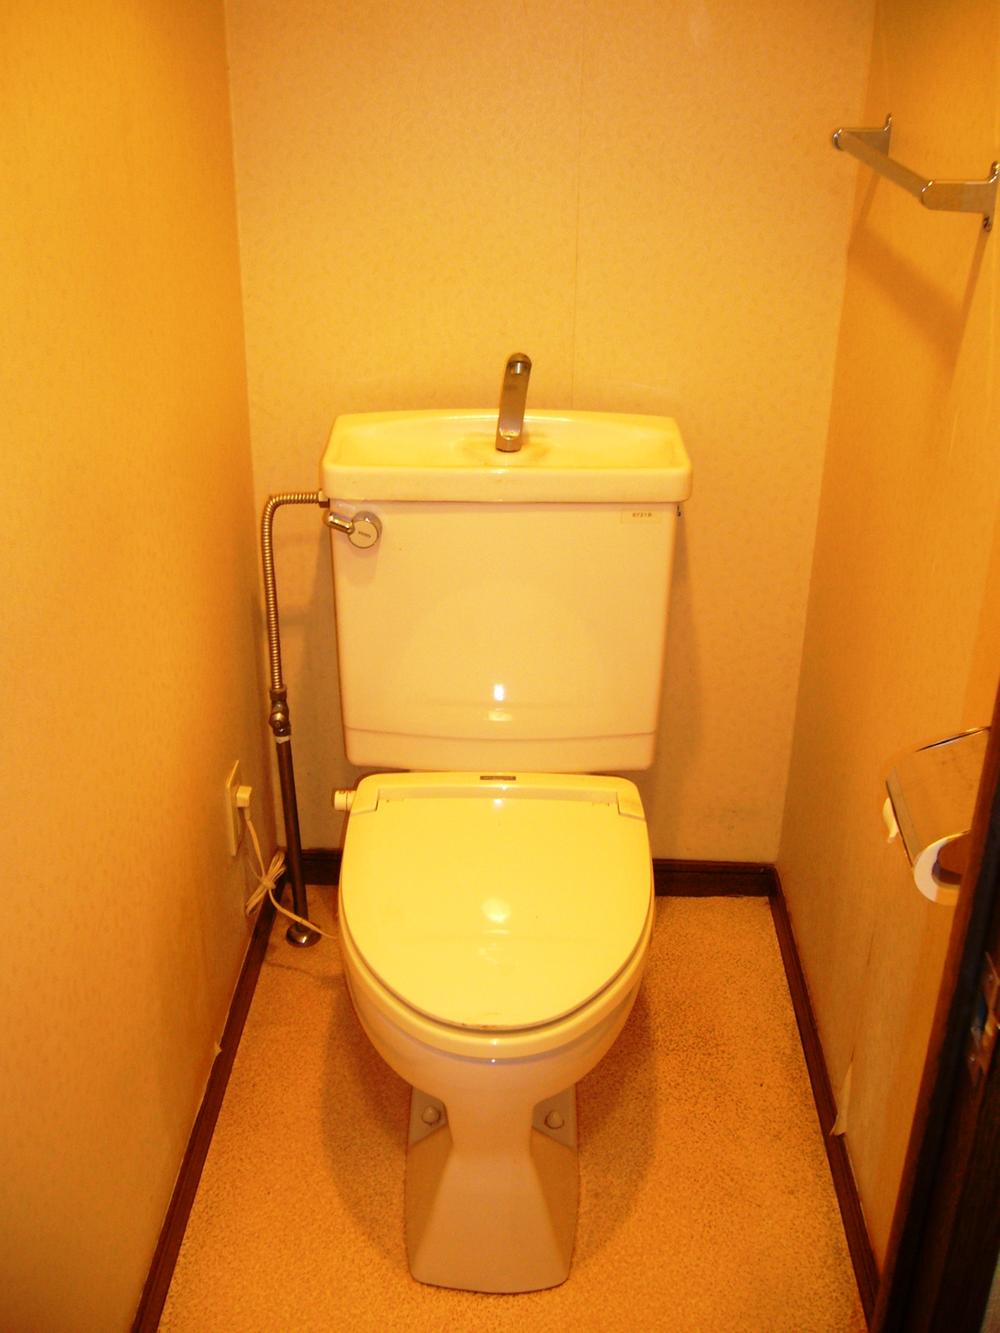 Toilet. Toilet (July 2013 shooting)